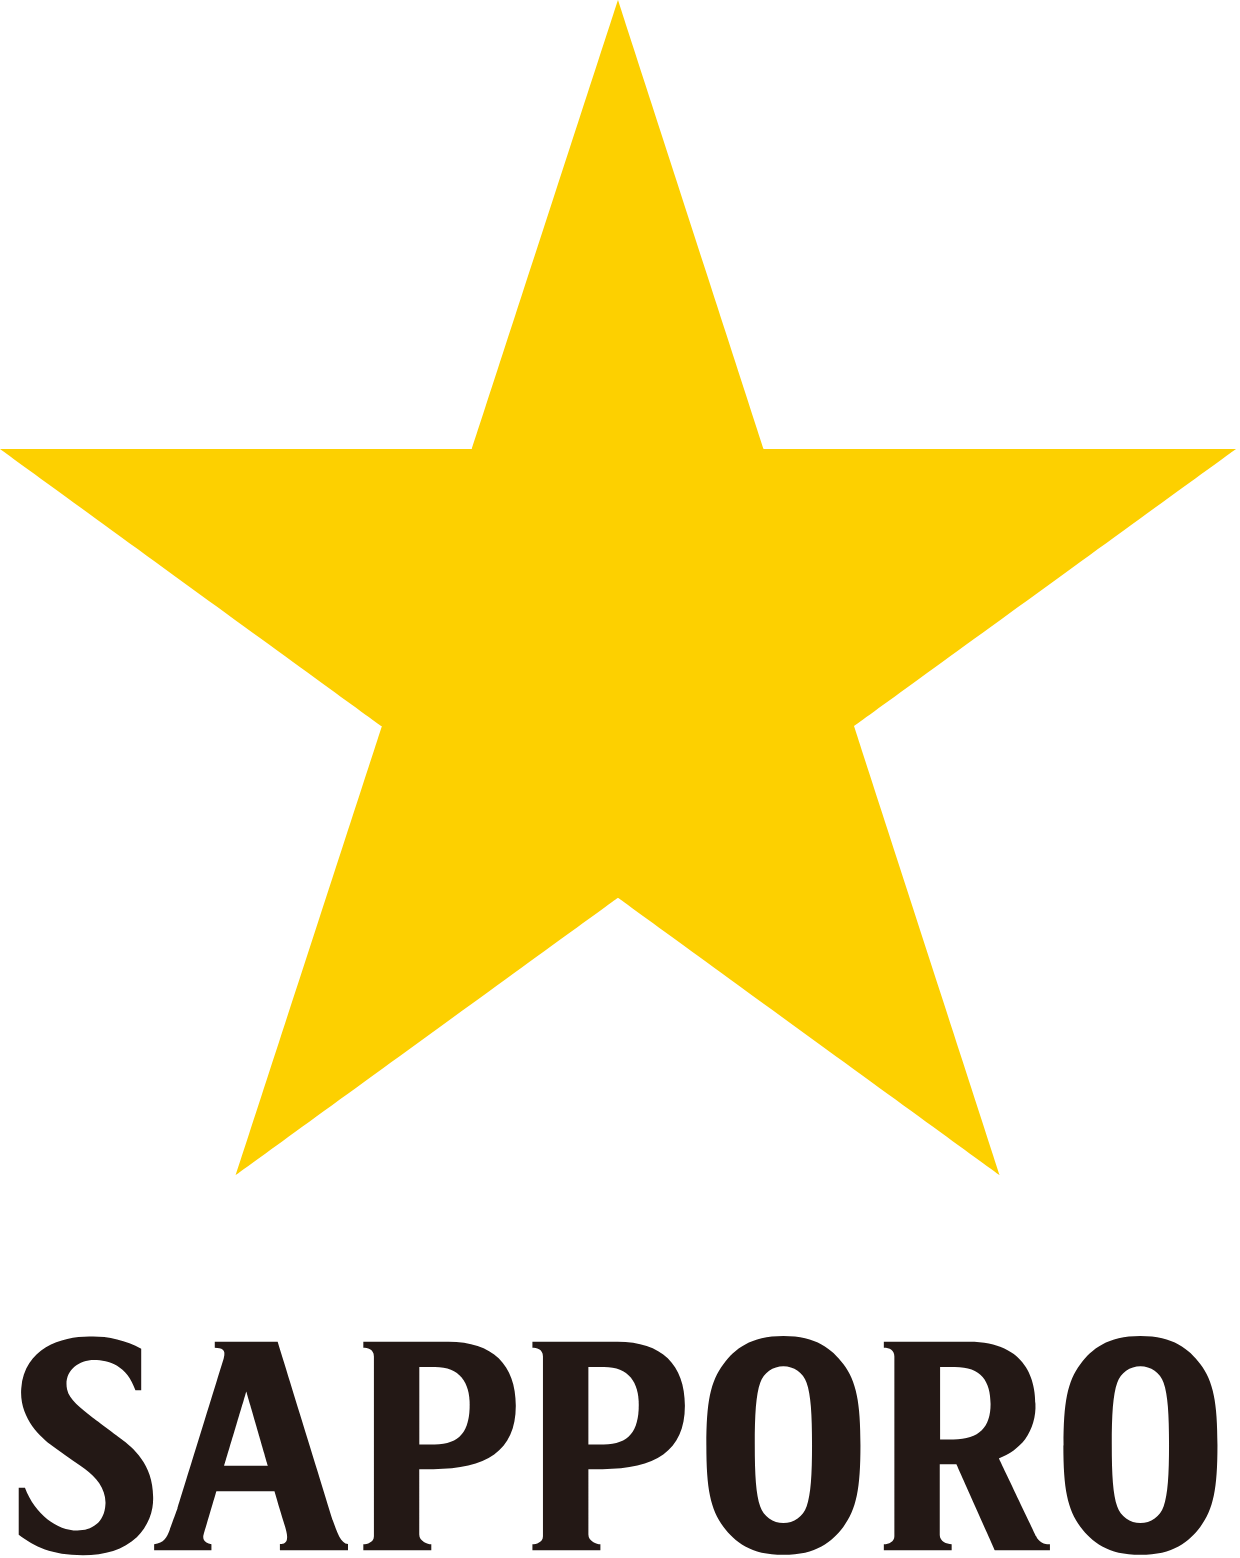 Sapporo logo large (transparent PNG)